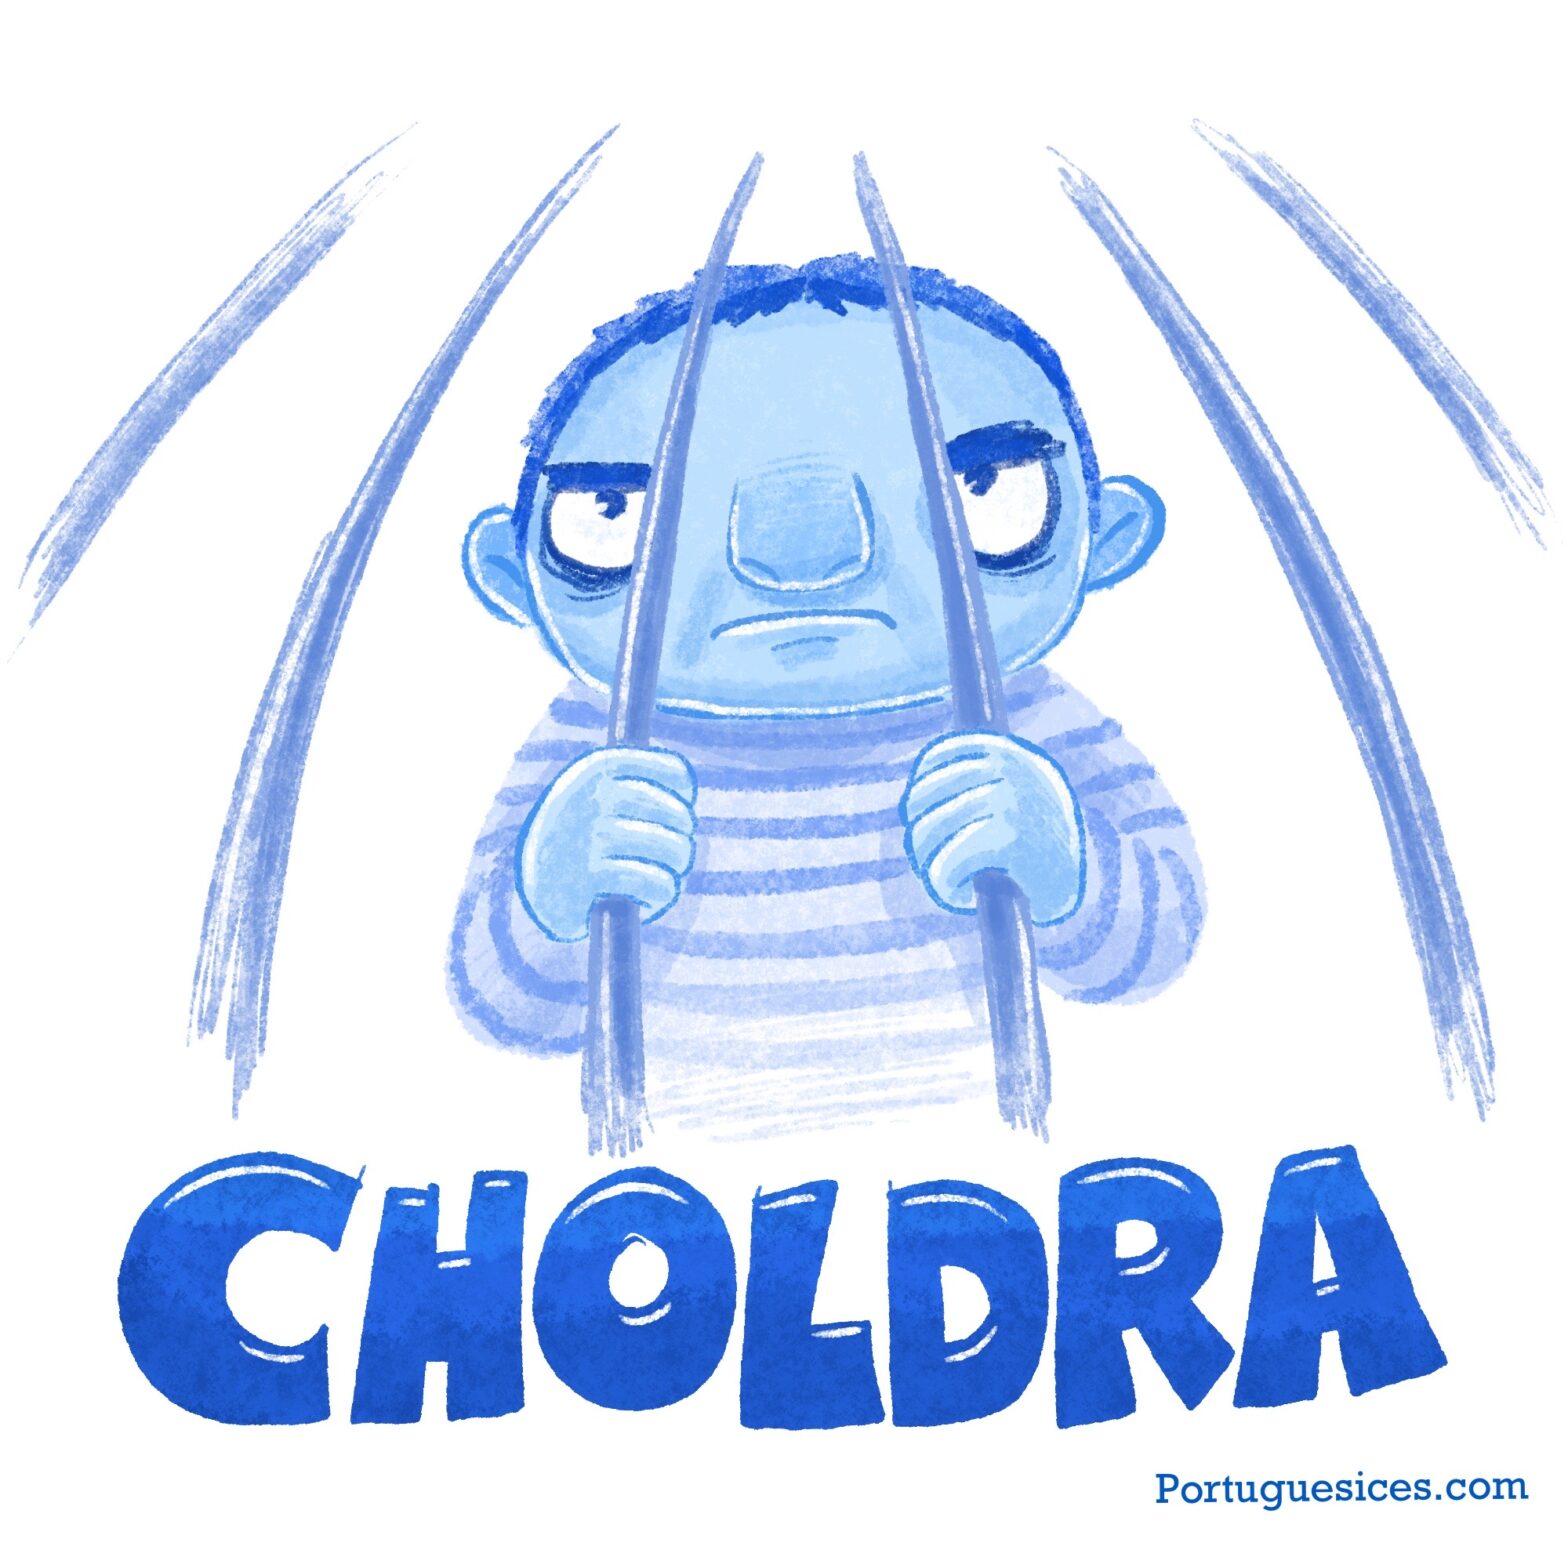 Choldra